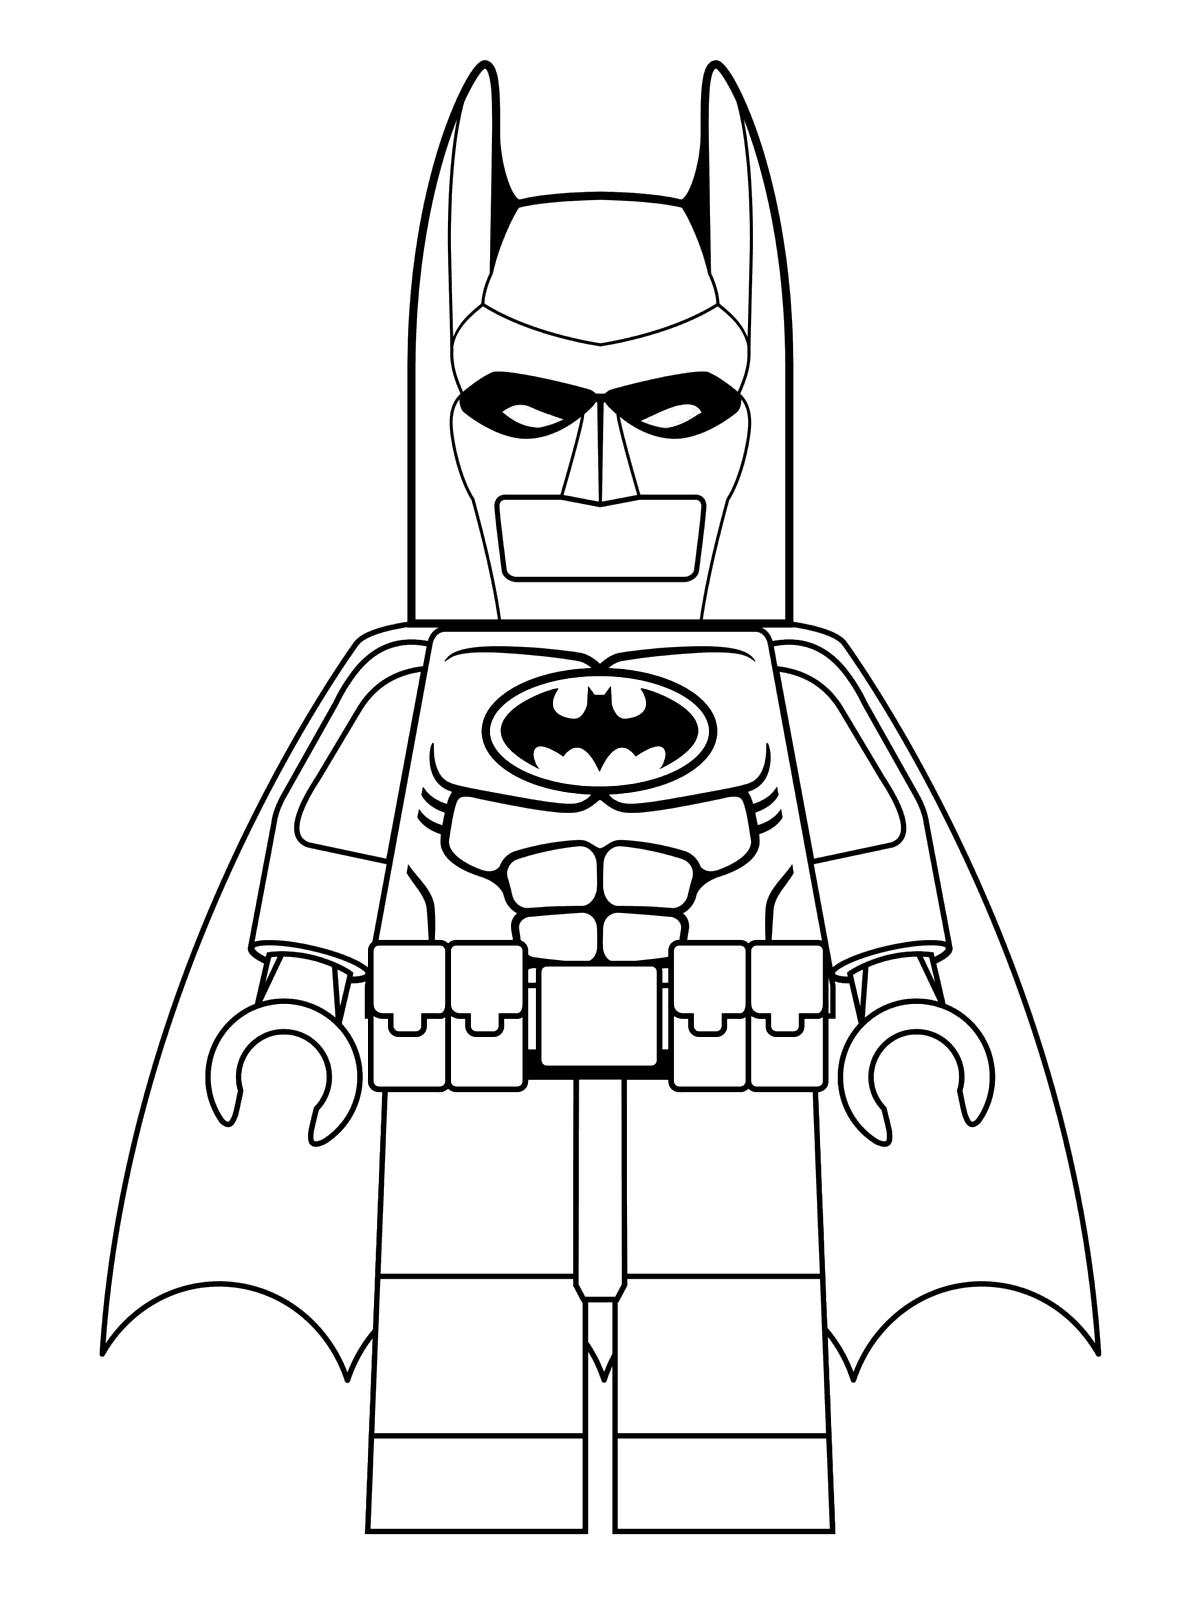 Lego batman to print - Lego Batman Kids Coloring Pages